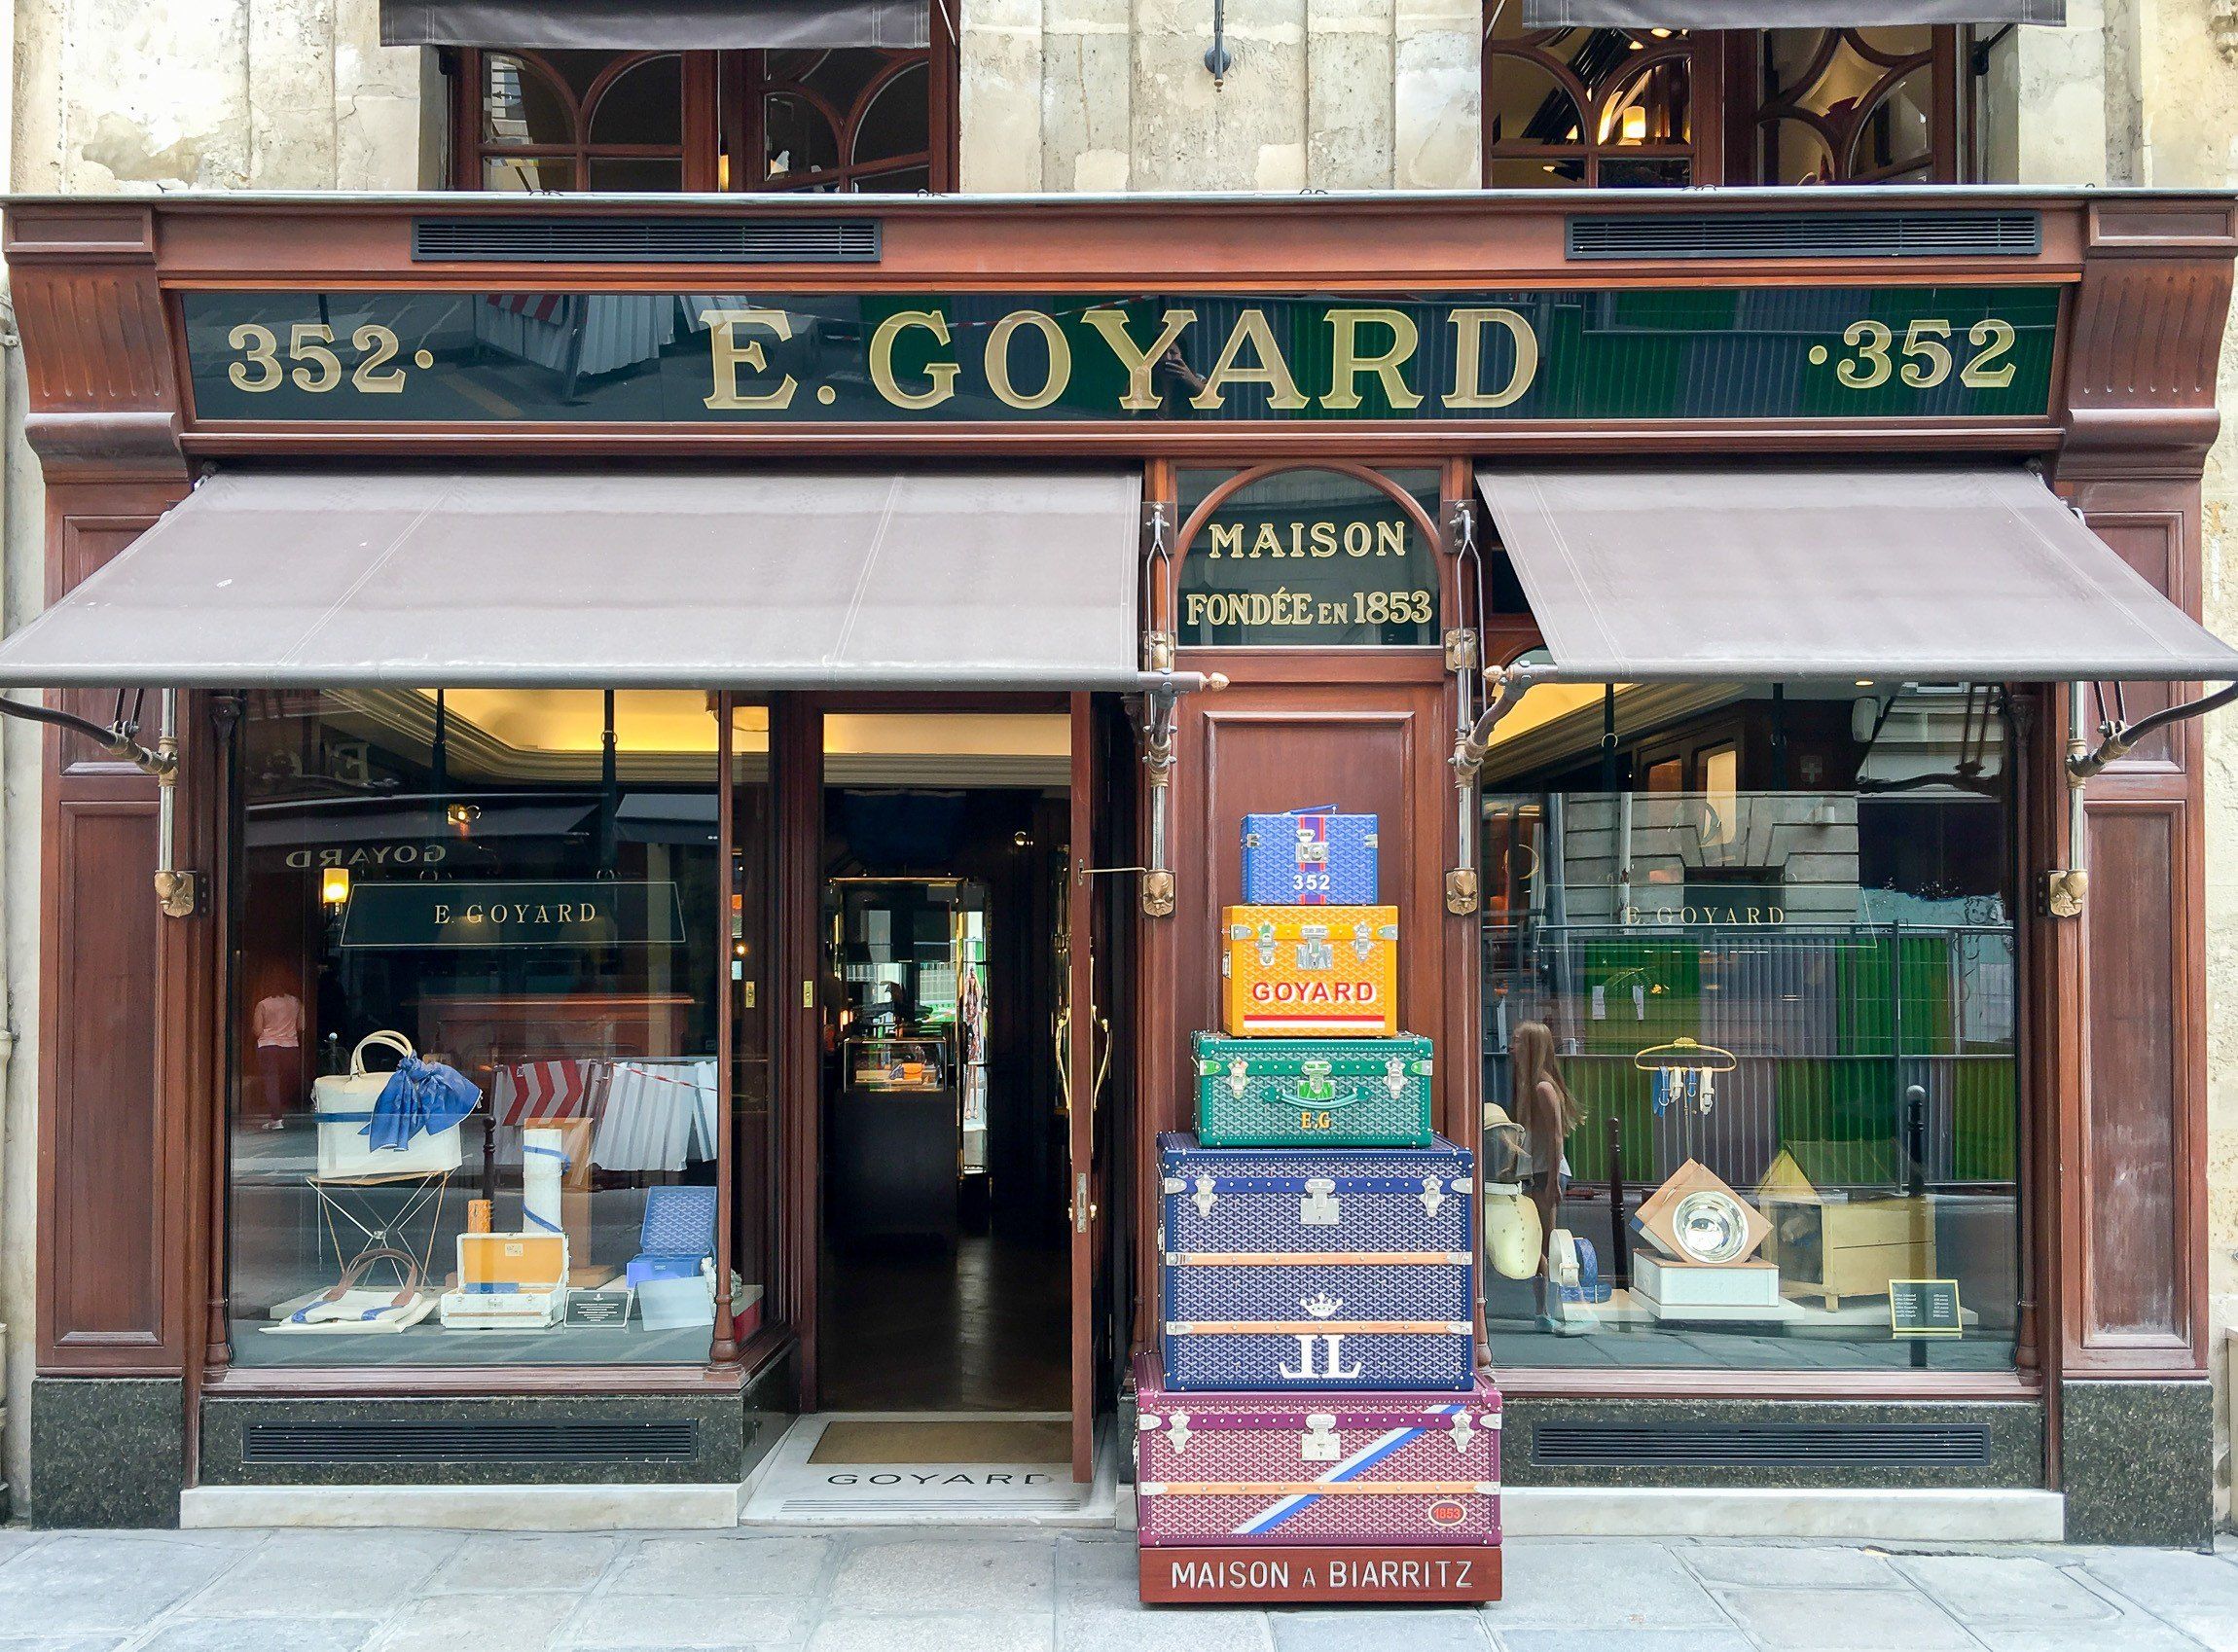 Socialuxclub - Maison Goyard in Paris. One of our favorite